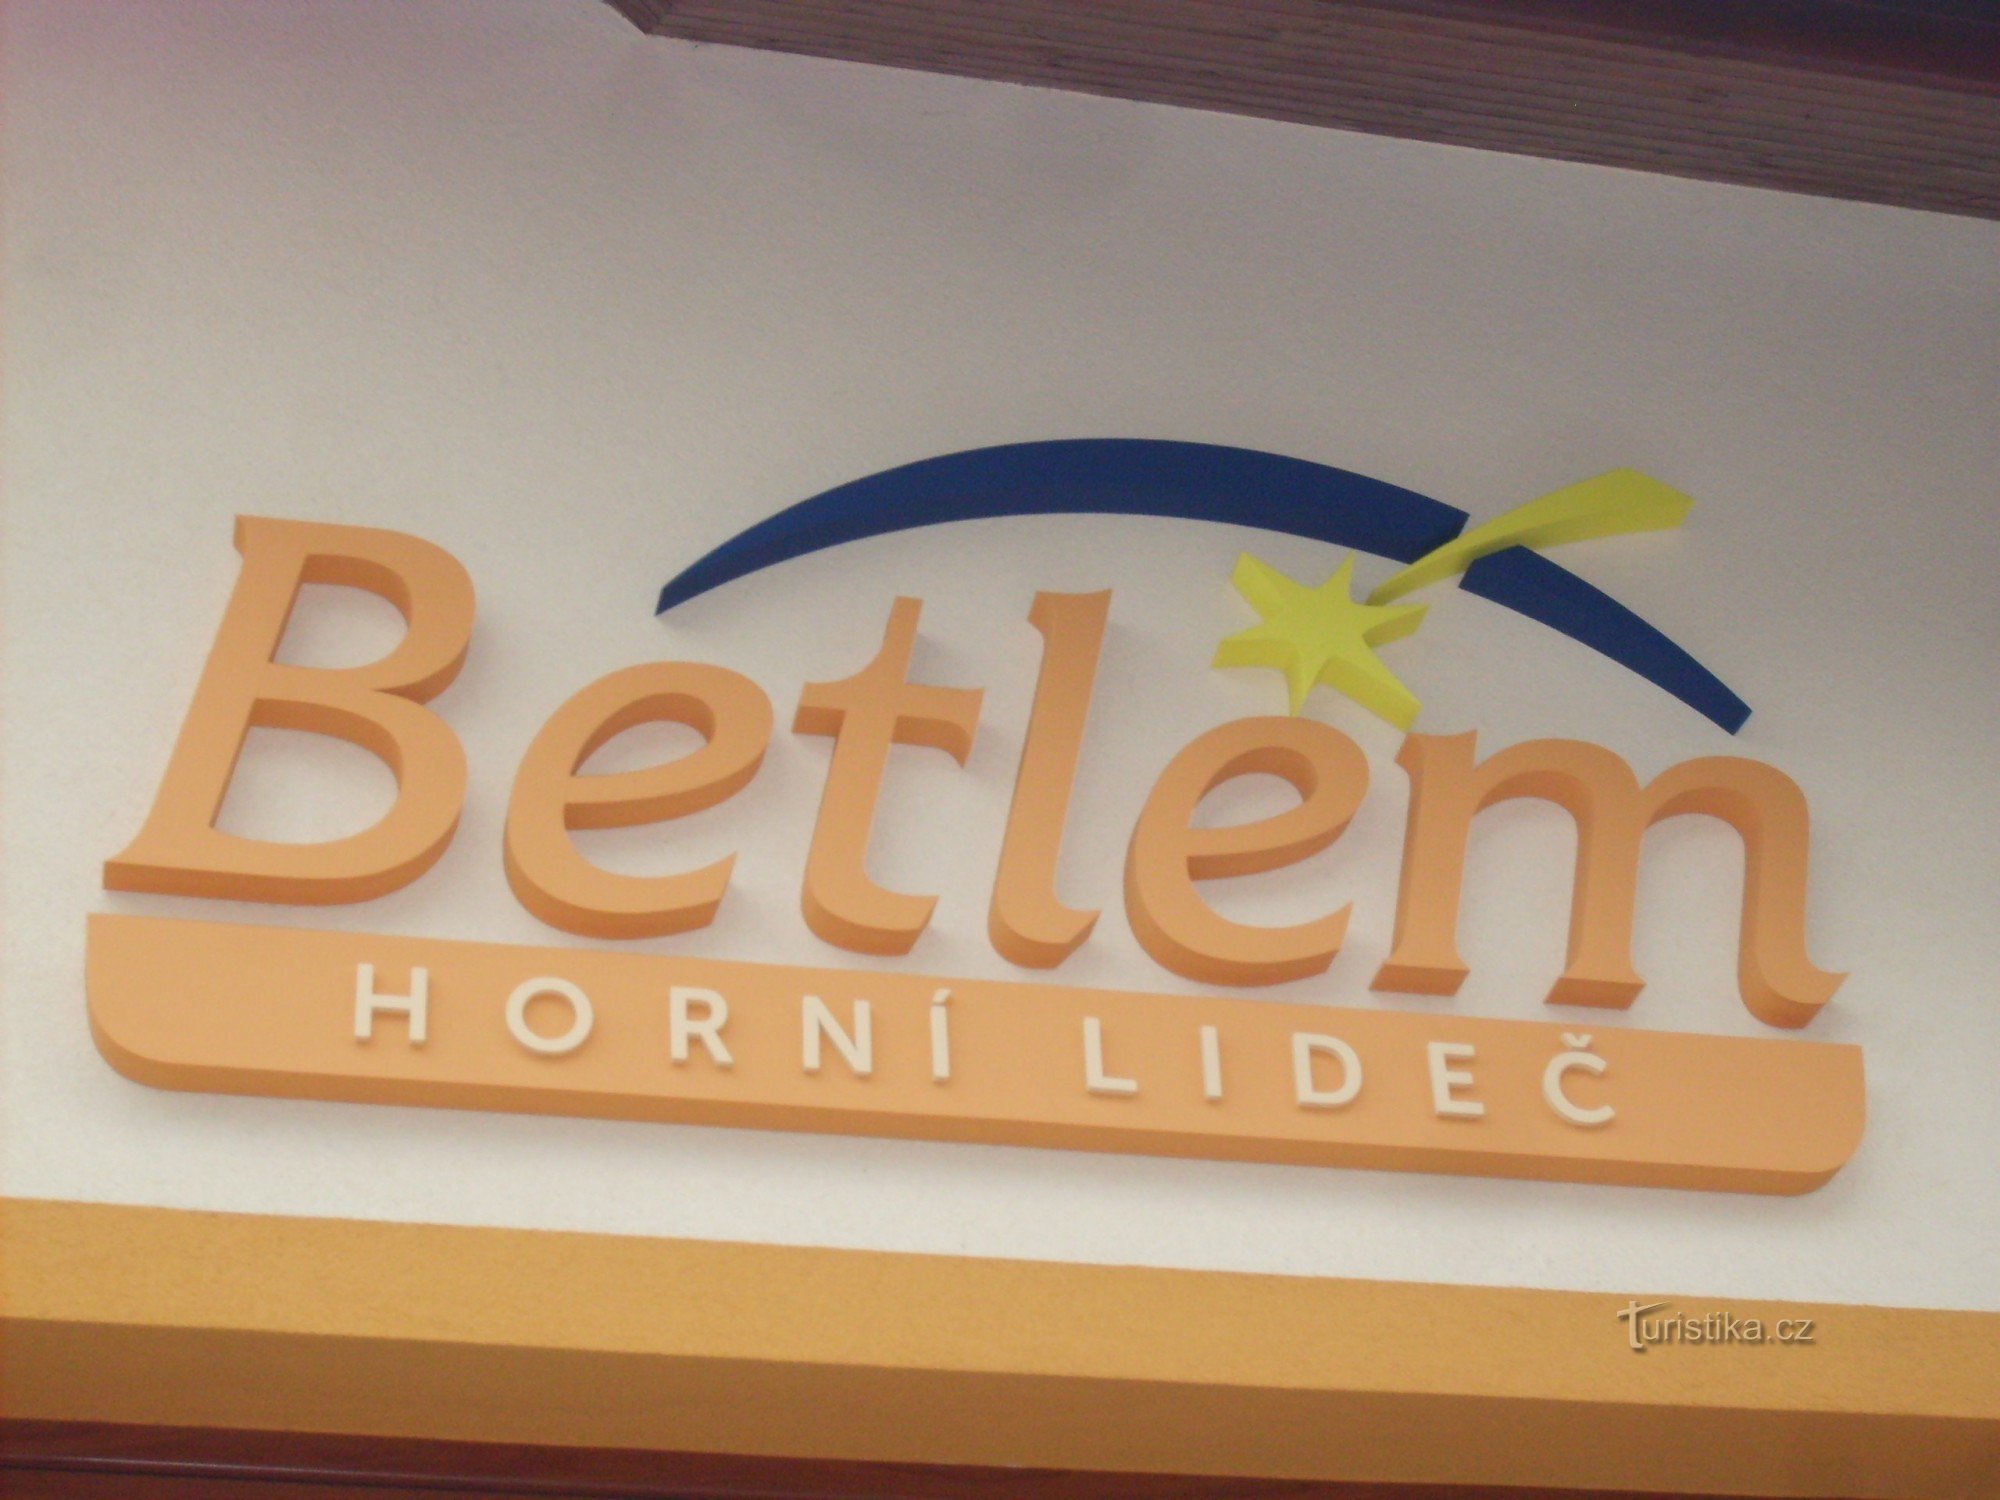 Bethléem